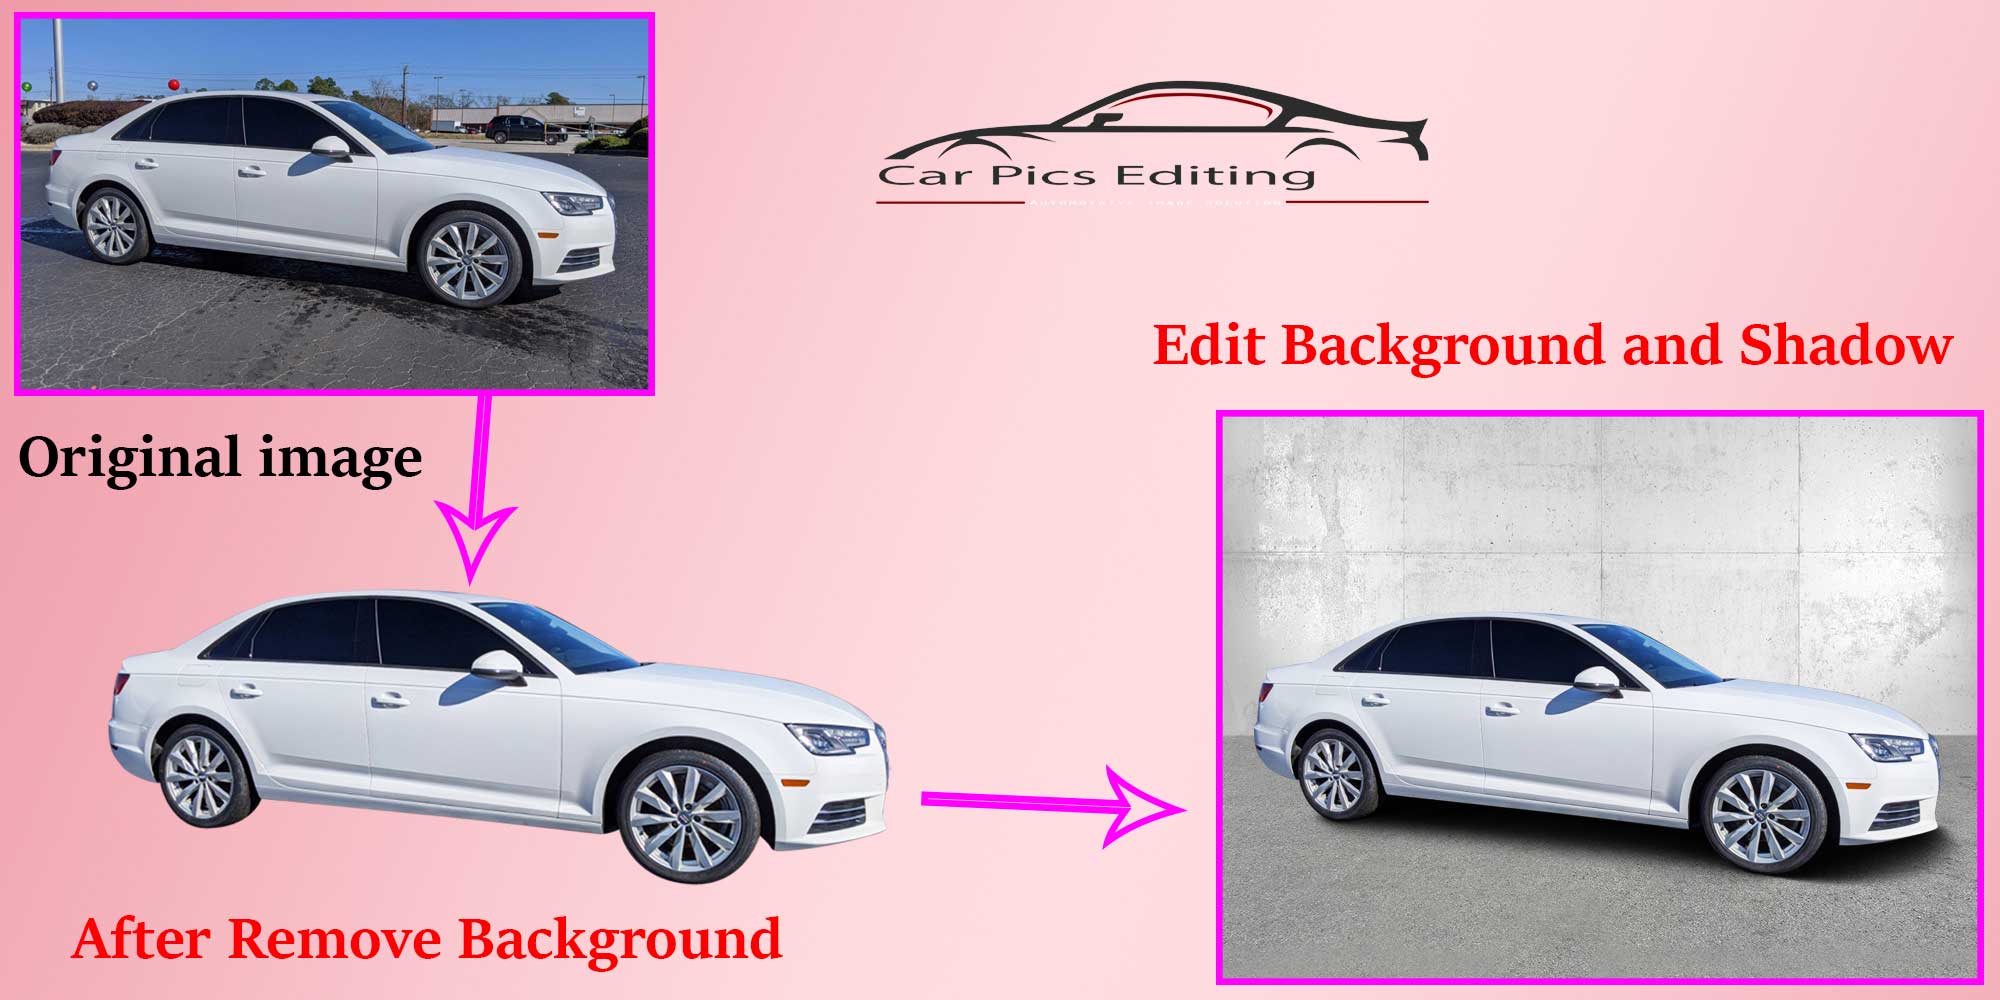 Car image editing process